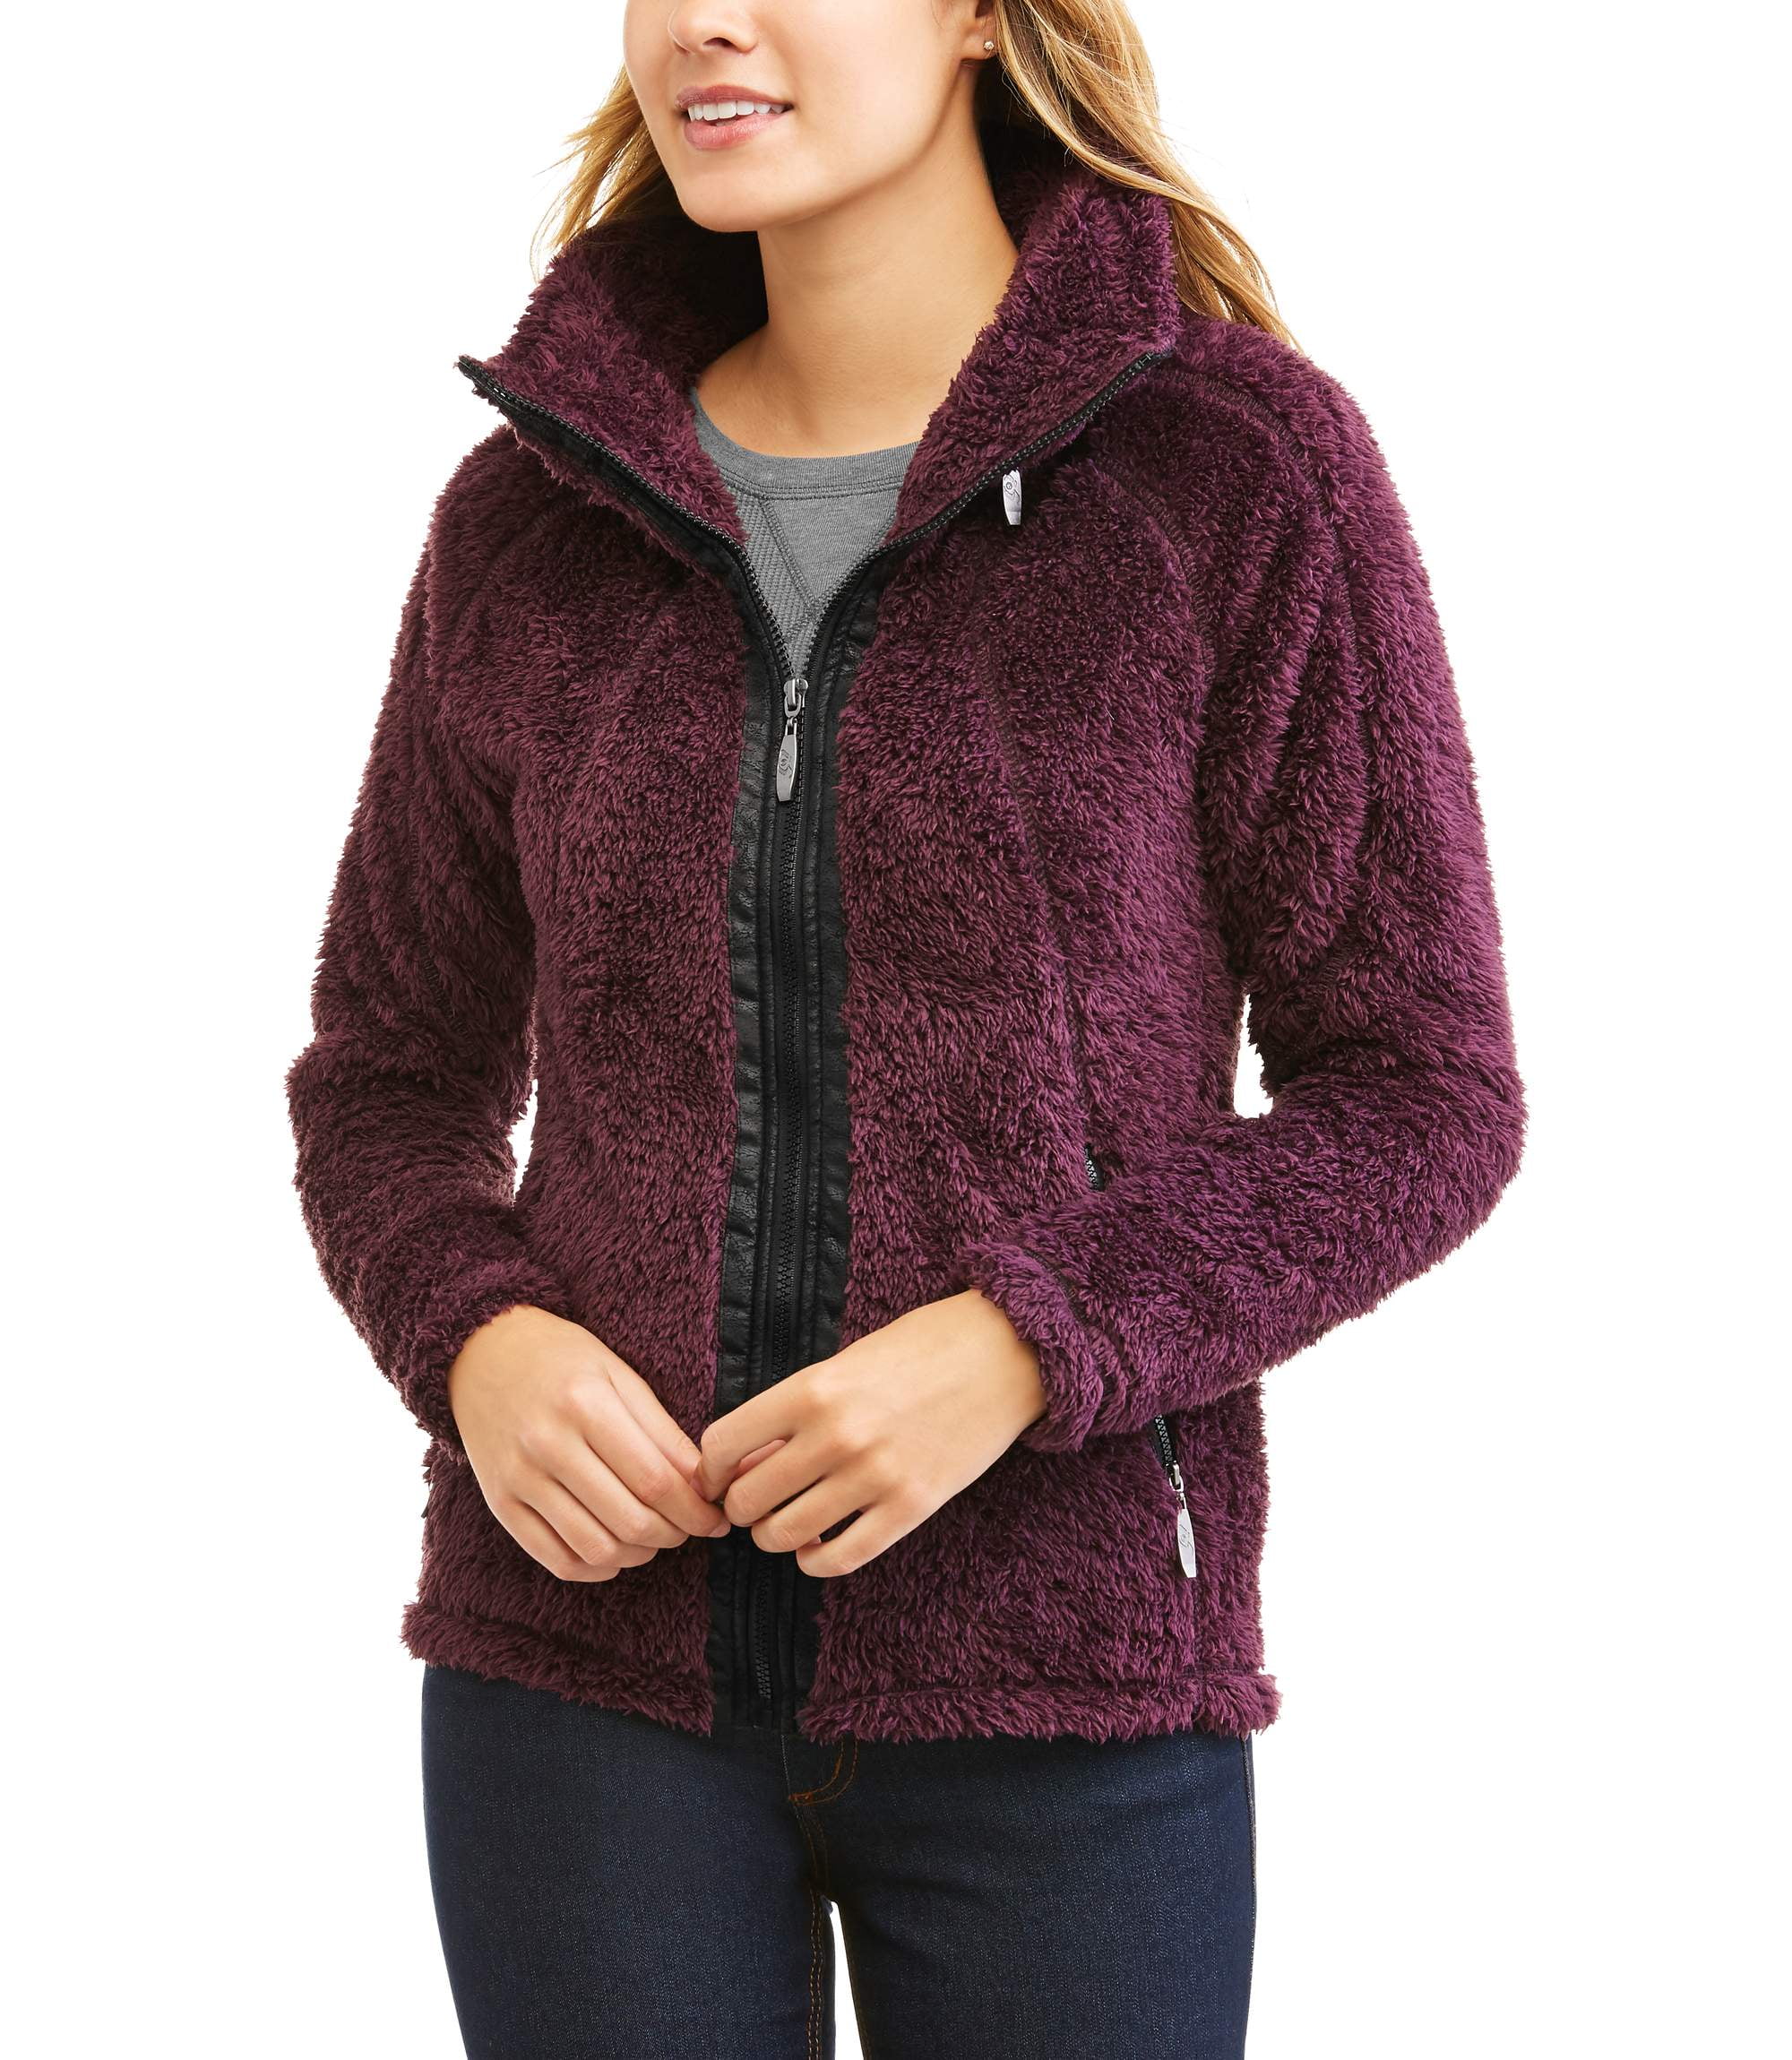 soft fuzzy womens jacket Hot Sale - OFF 64%